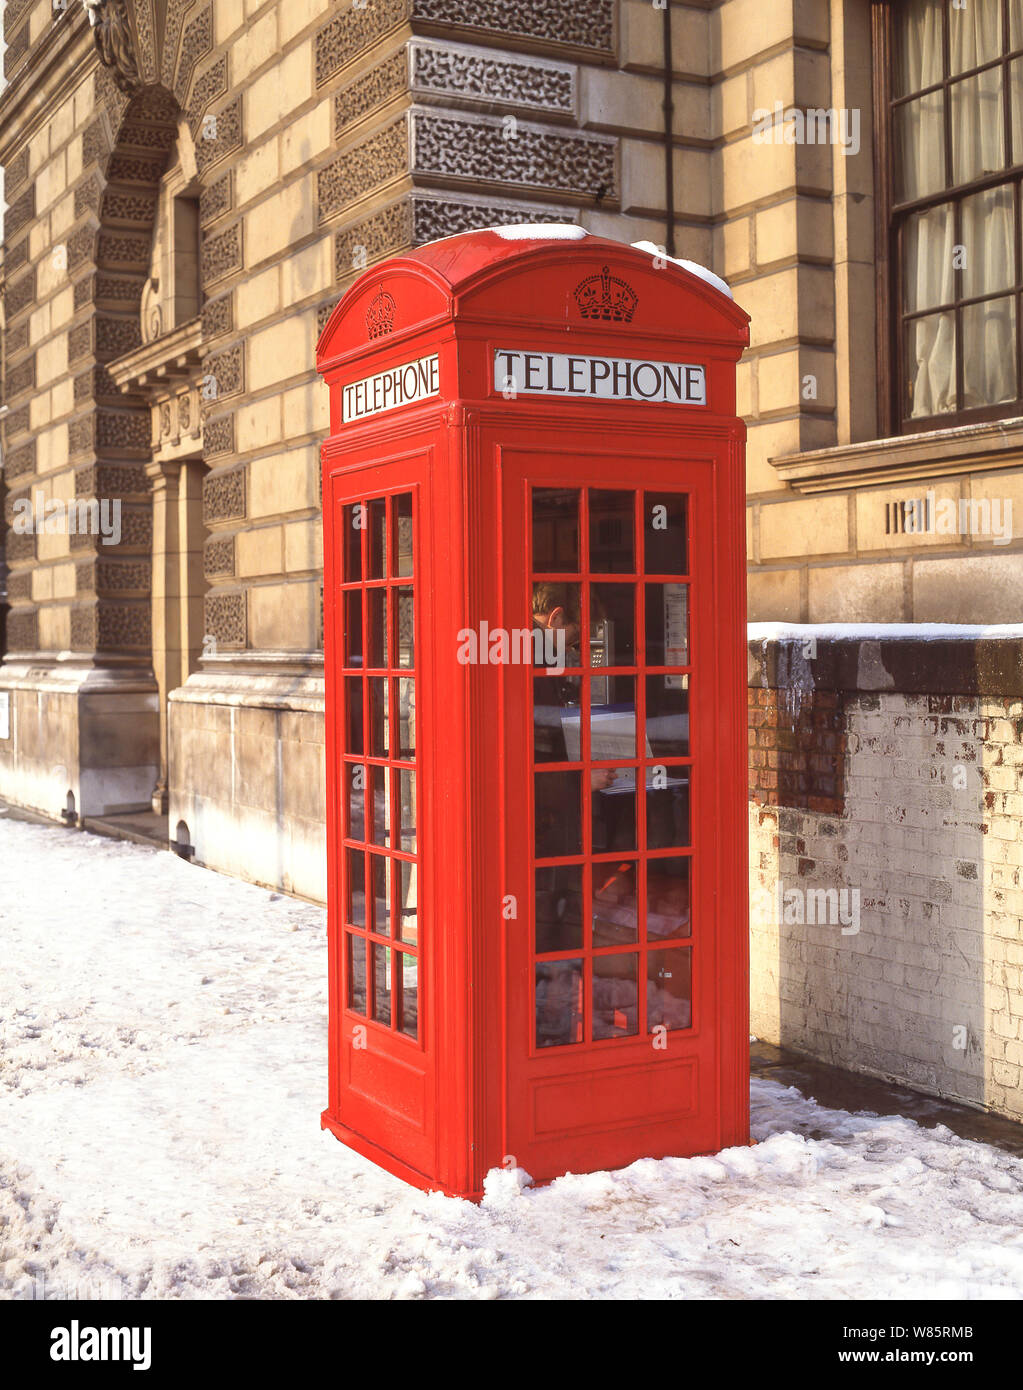 Traditionelles rotes Telefon Kiosk im Winter Schnee, Parliament Square, Westminster, London, England, Vereinigtes Königreich Stockfoto